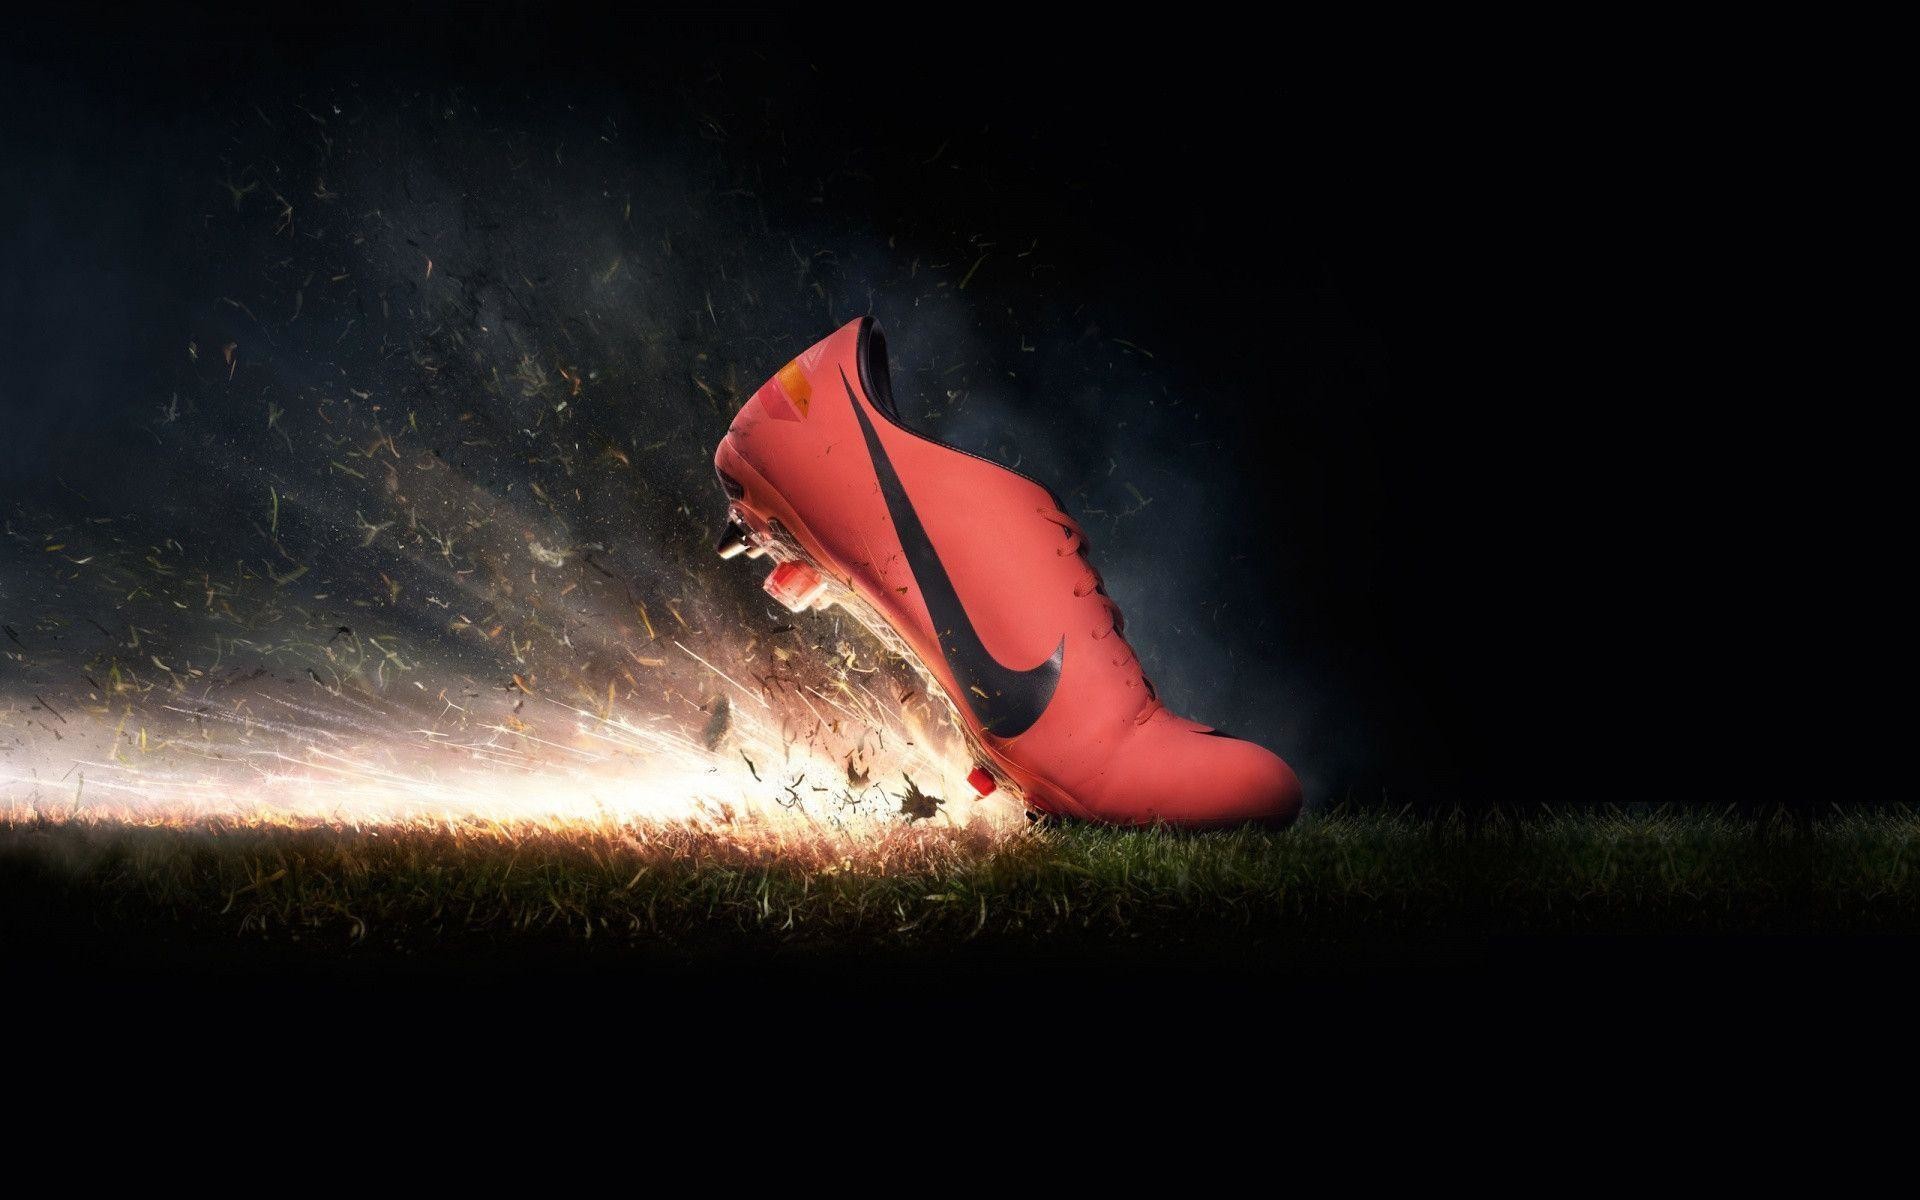 mejores fondos de pantalla de fútbol hd,calzado,rojo,zapato,atmósfera,carmín